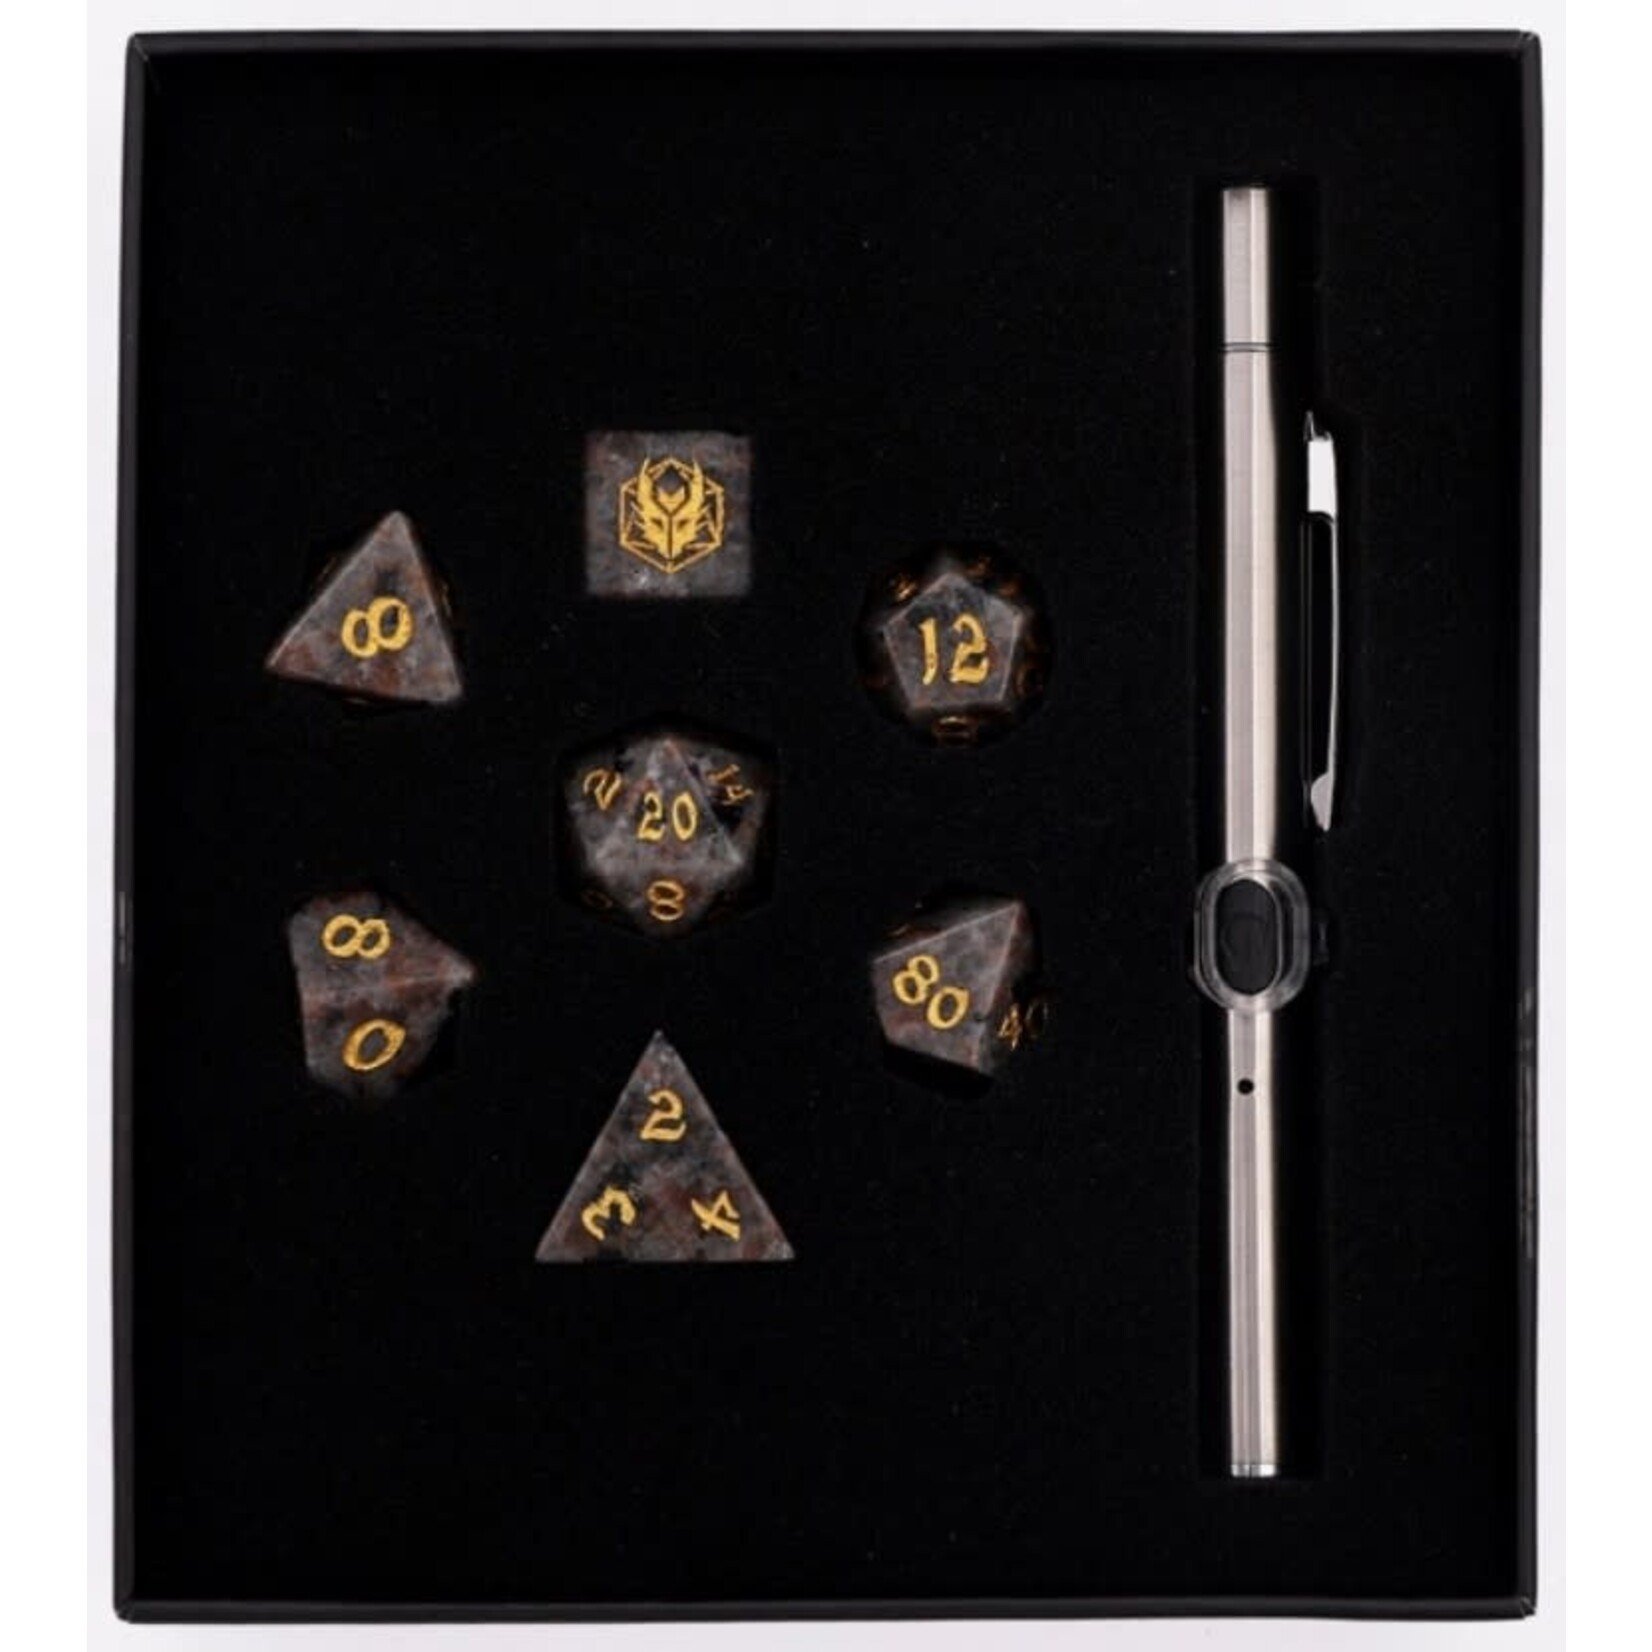 Hymgho Premium Dice Dragon's Hoard Gem Stone Polyhedral Dice Set: Yooperlite UV Light Reactive